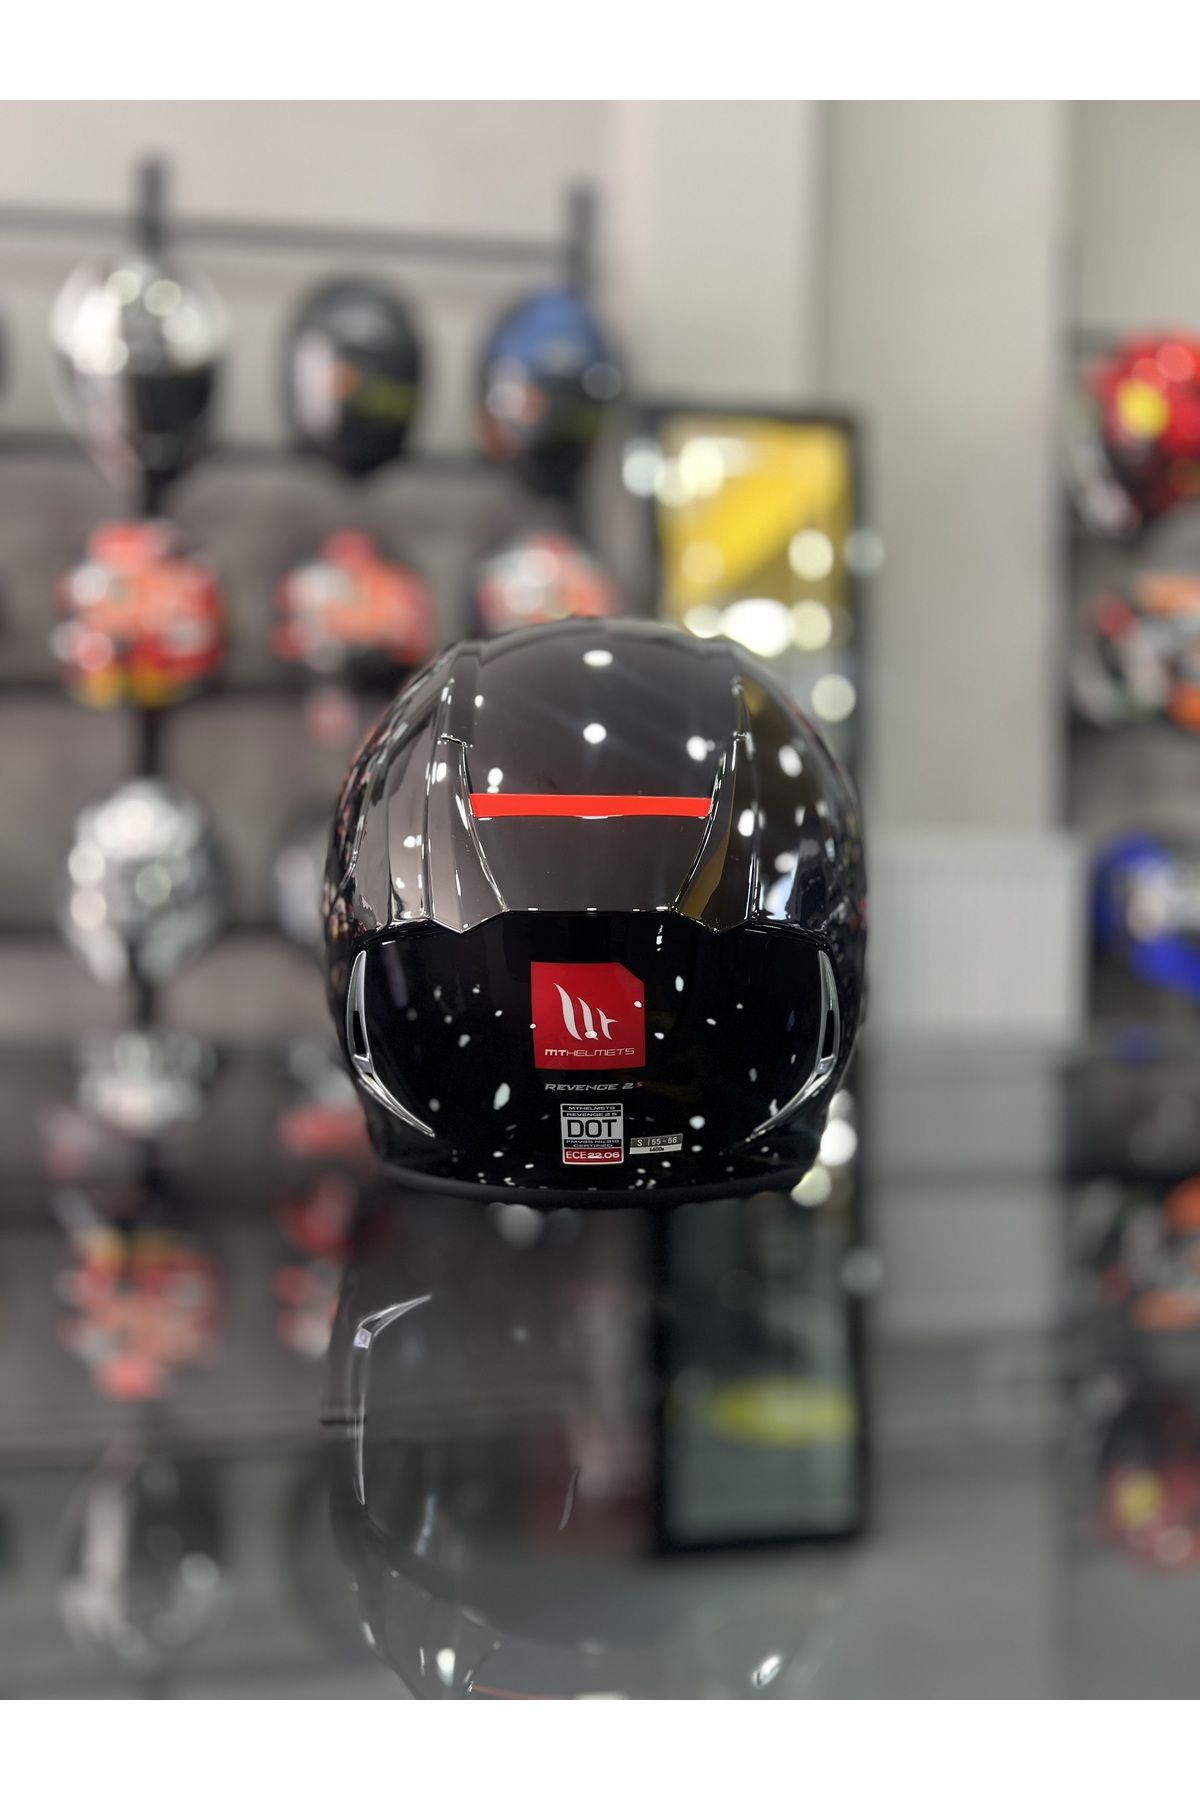 Mt Helmet REVENGE 2 RS A1 Integral Motorcycle Helmet Black Gloss For Sale  Online 